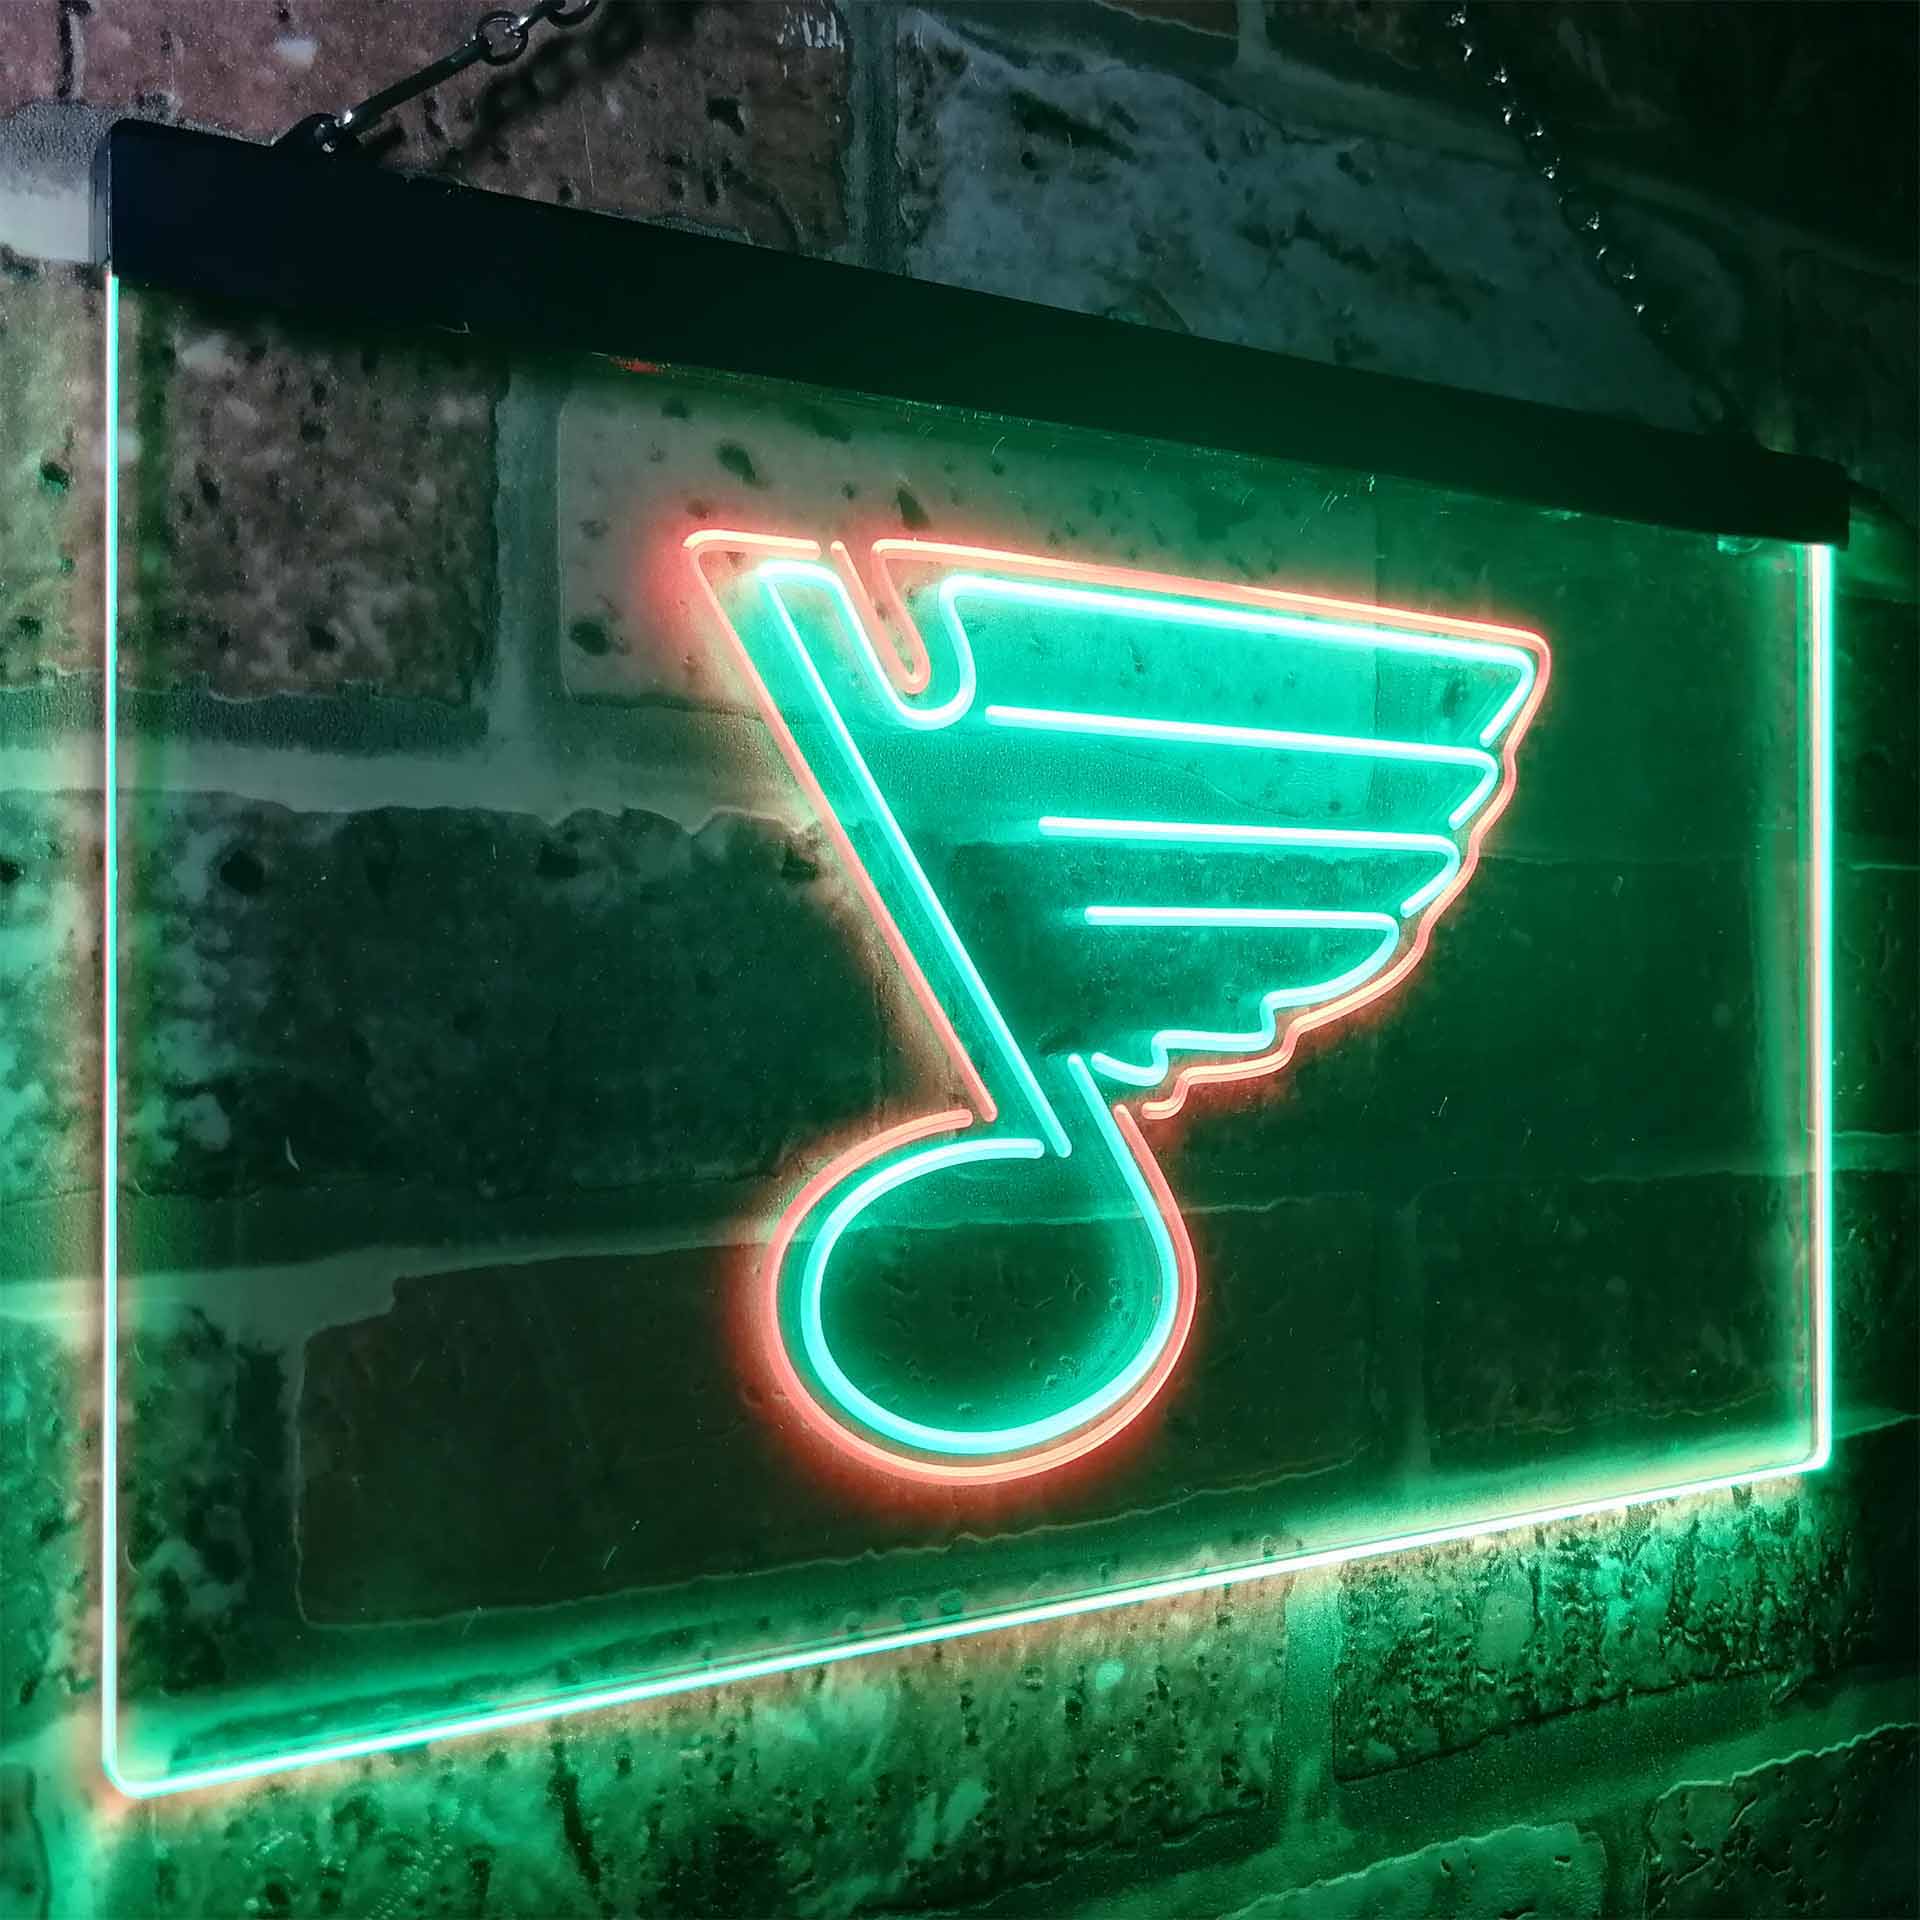 St Louis Blues Neon-Like LED Sign